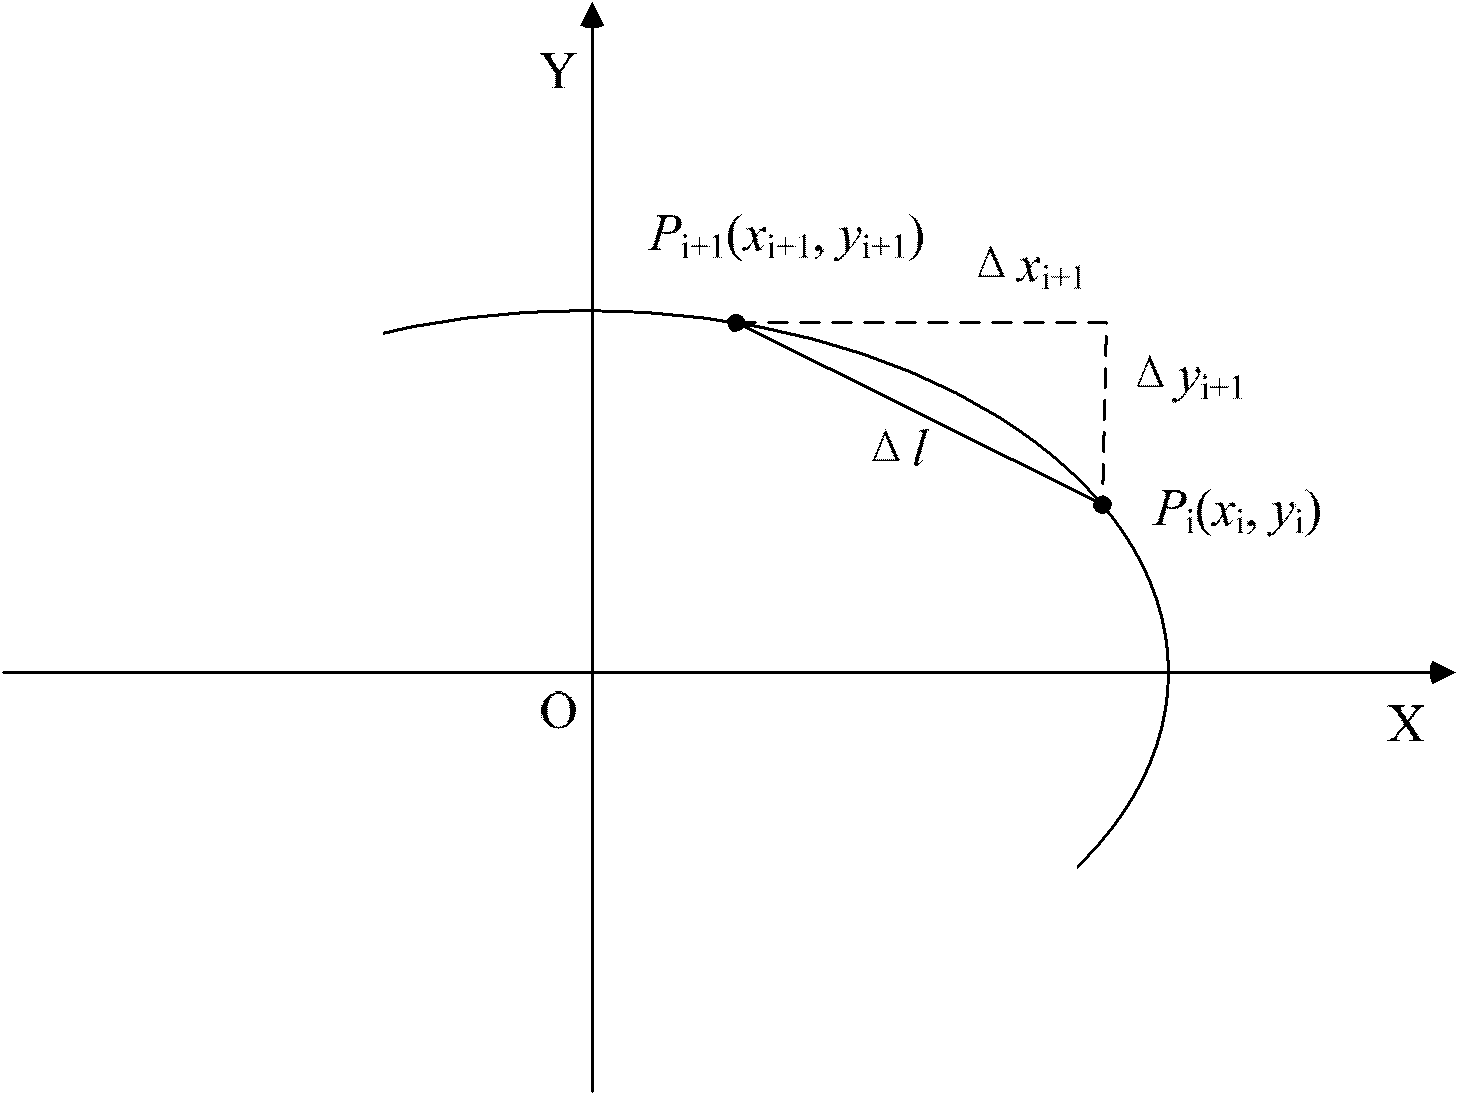 Elliptic arc interpolation method